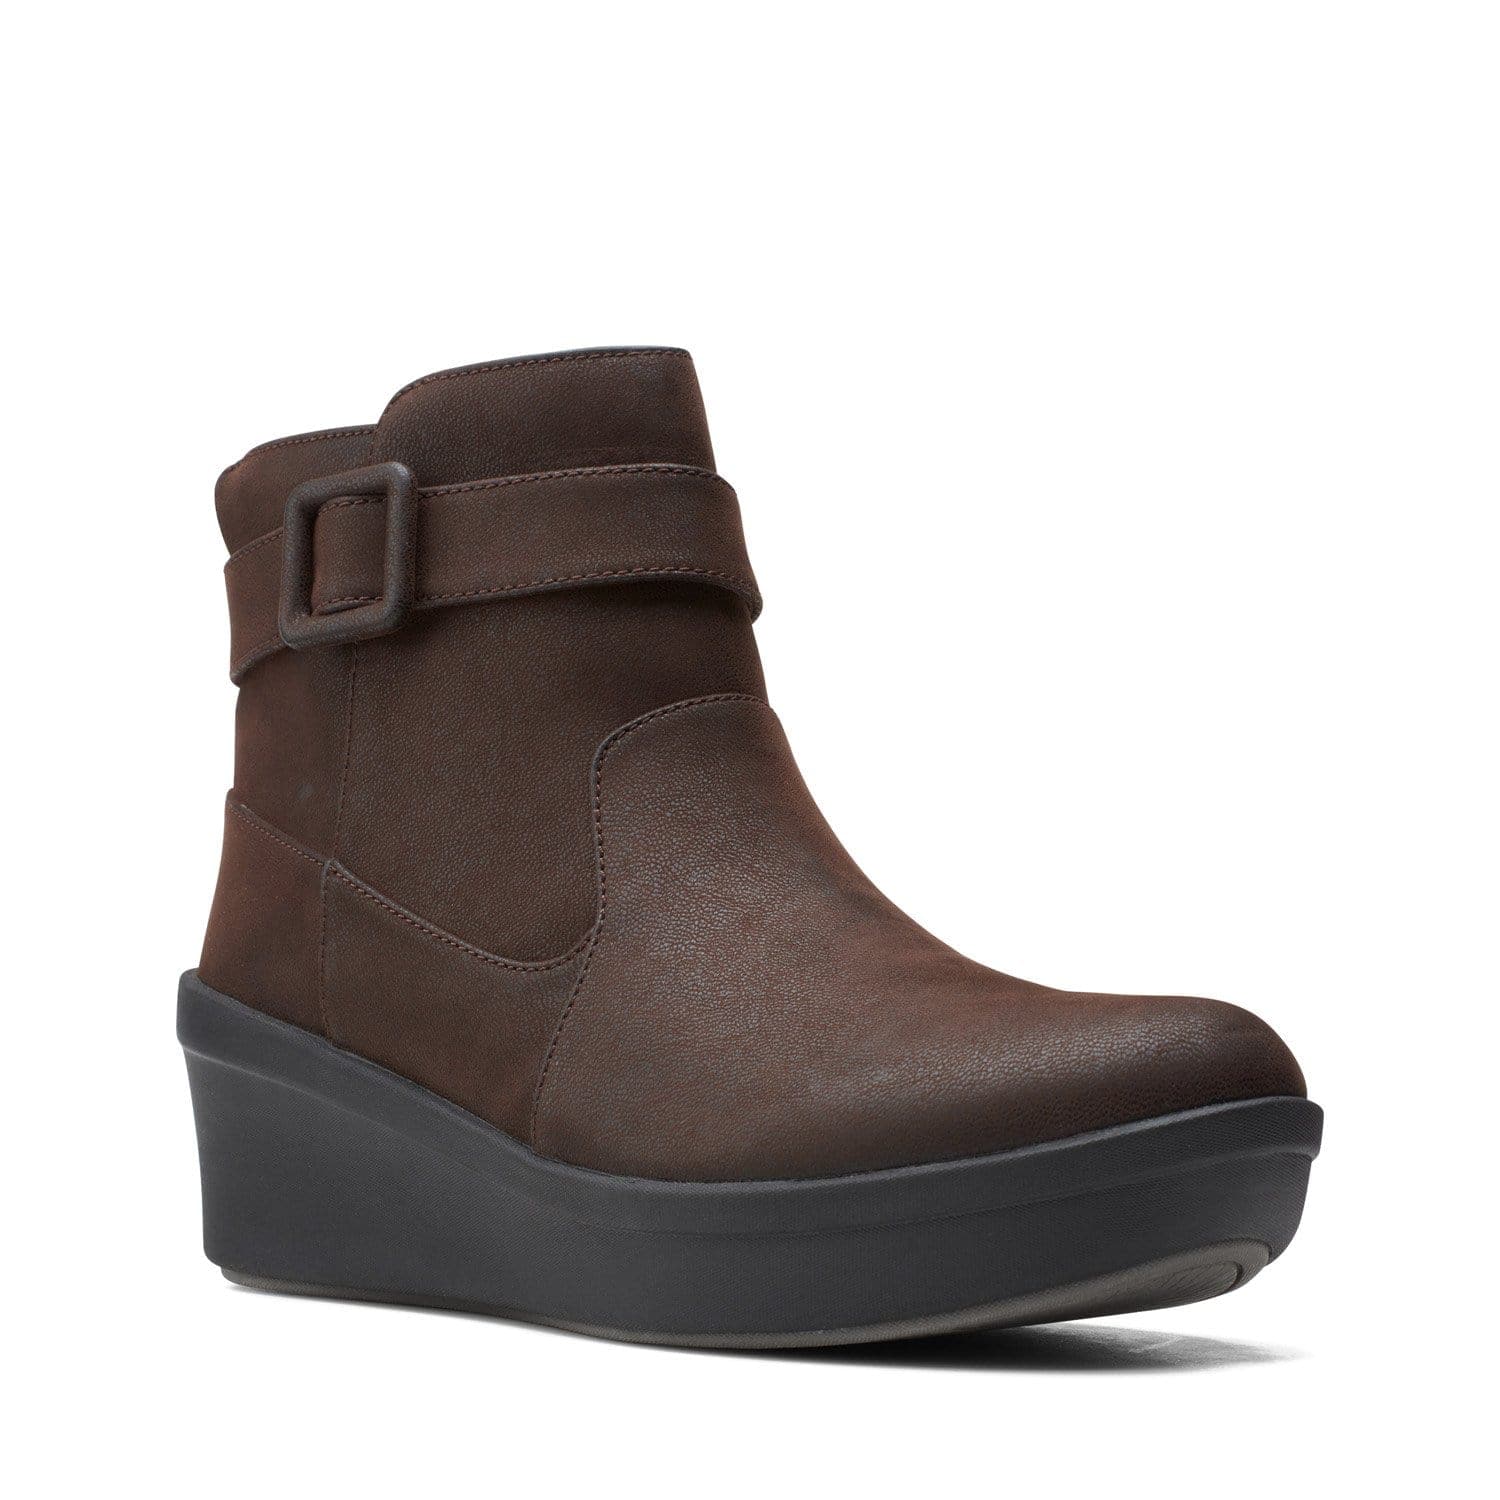 clarks-step-rose-belle-boots-brown-textile-26151834-d-width-standard-fit